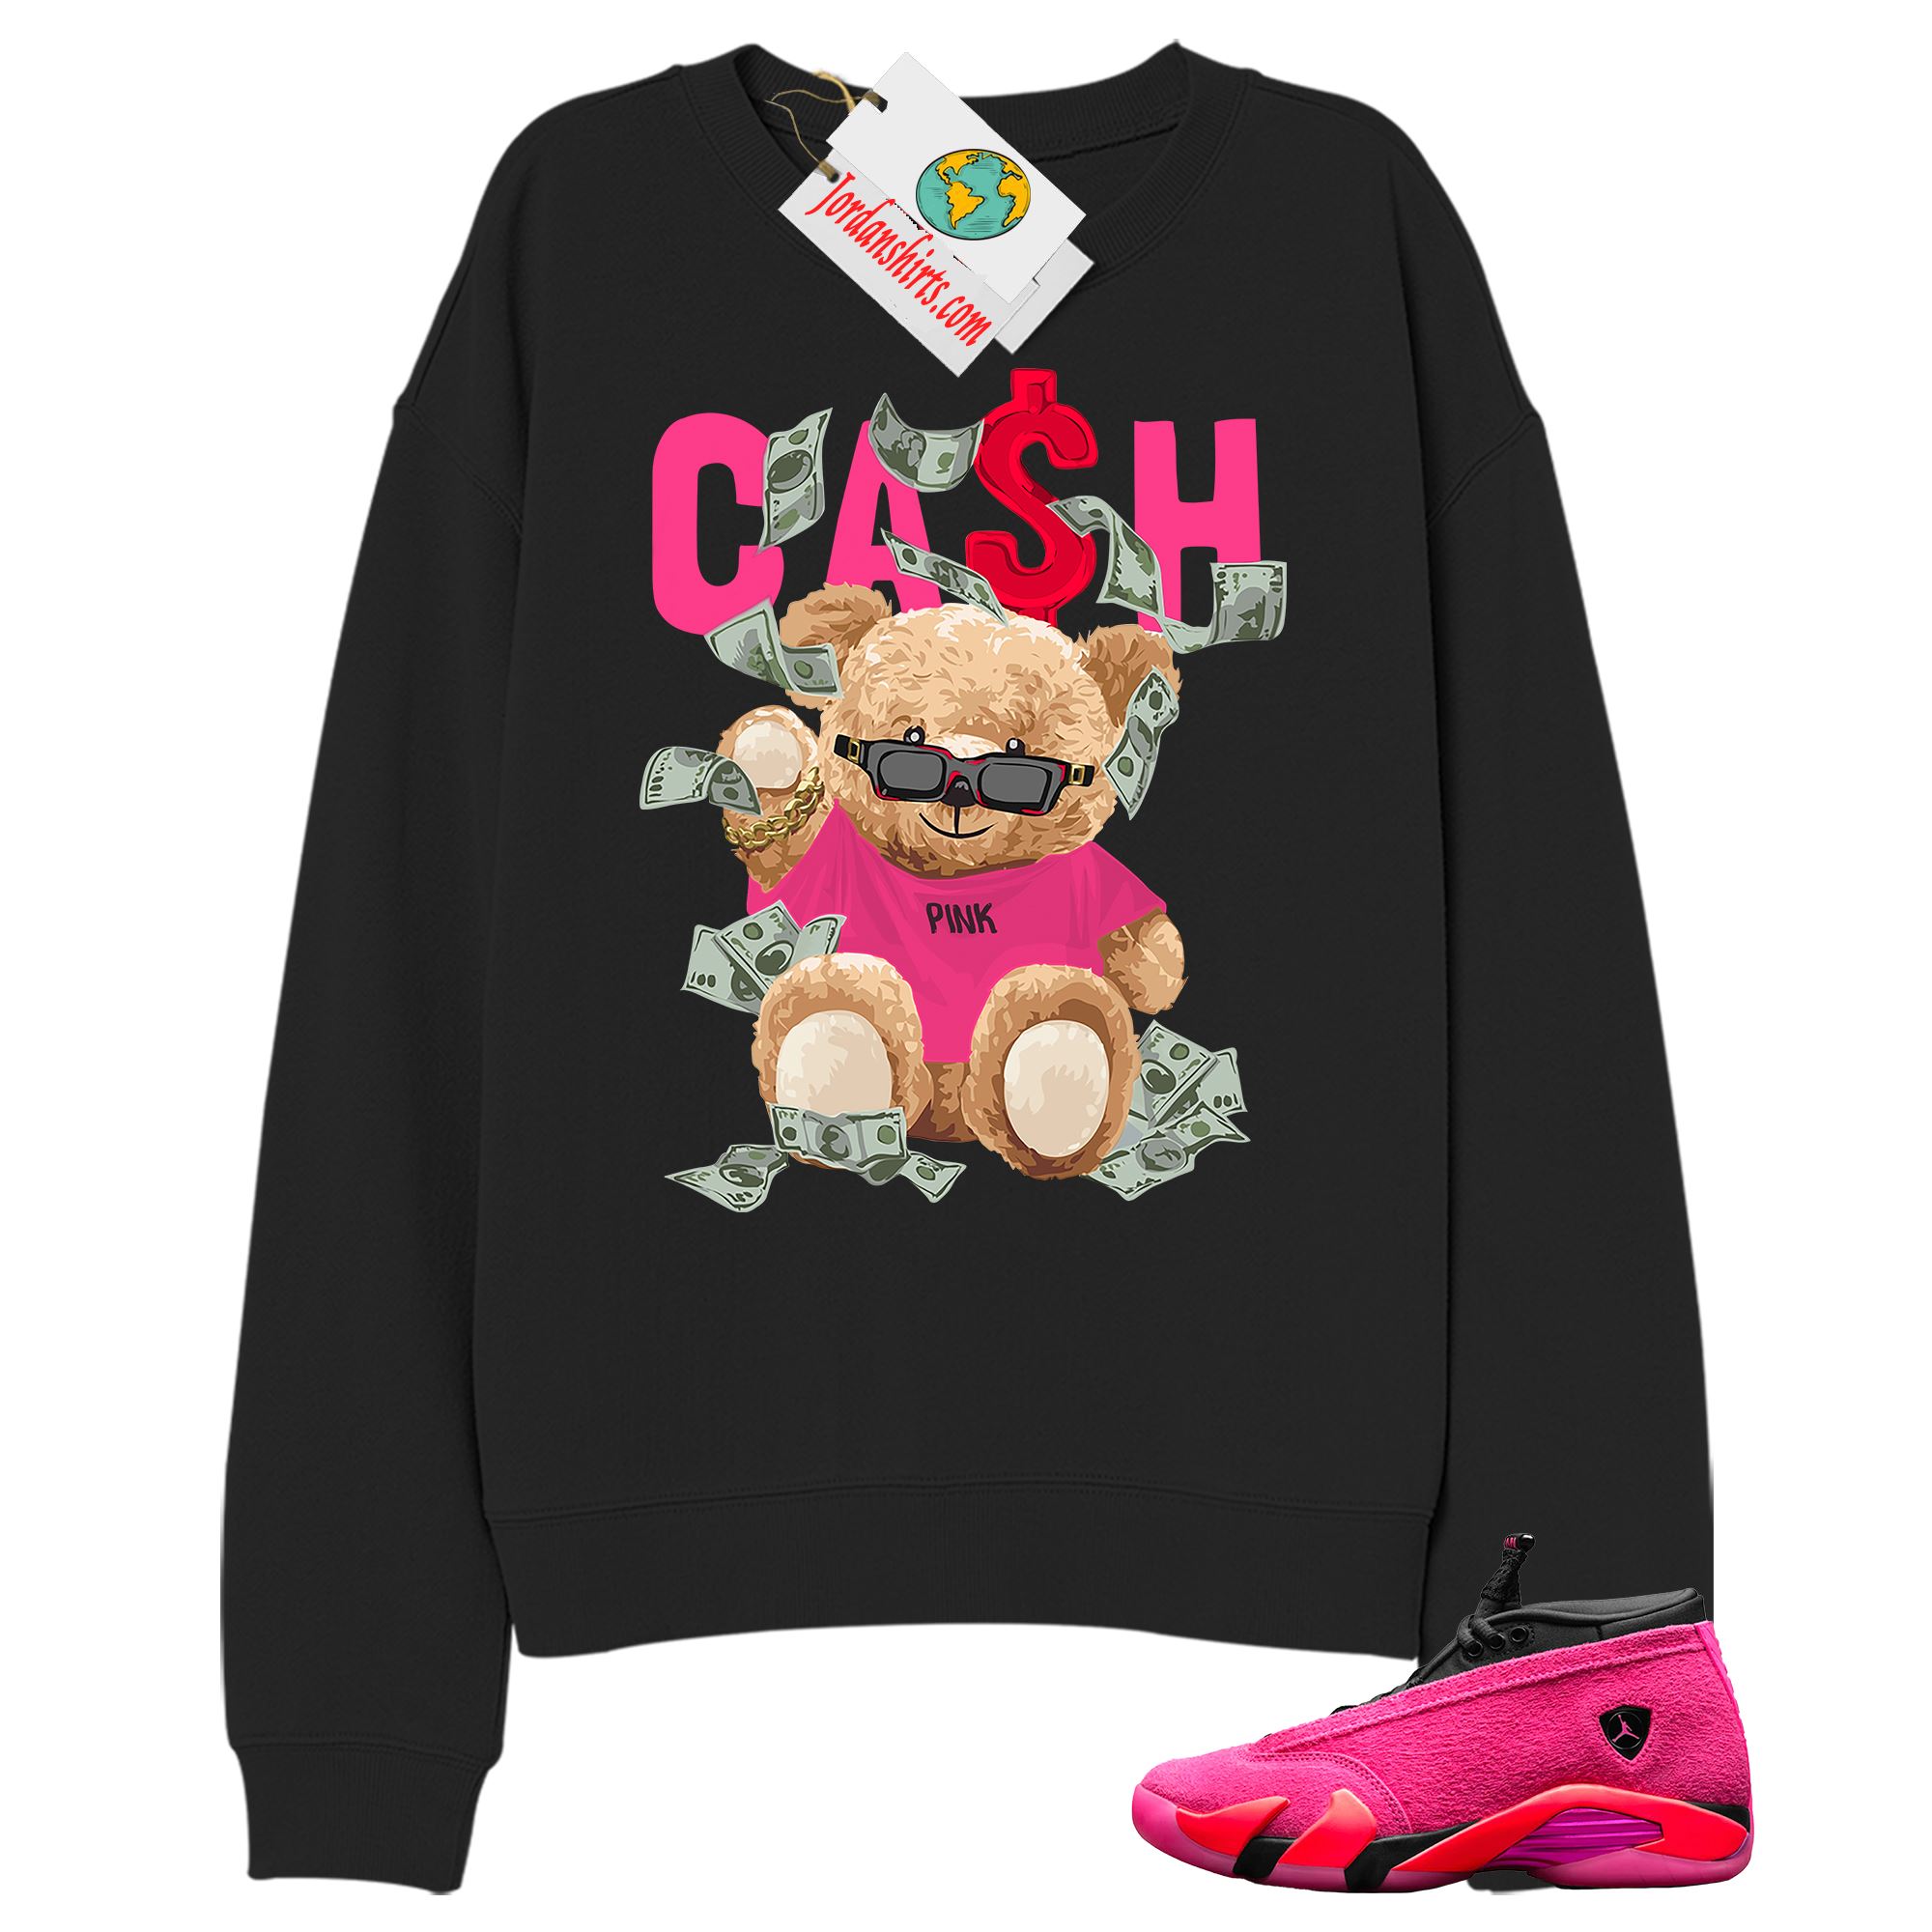 Jordan 14 Sweatshirt, Cash Teddy Bear In Sunglasses Black Sweatshirt Air Jordan 14 Wmns Shocking Pink 14s Full Size Up To 5xl